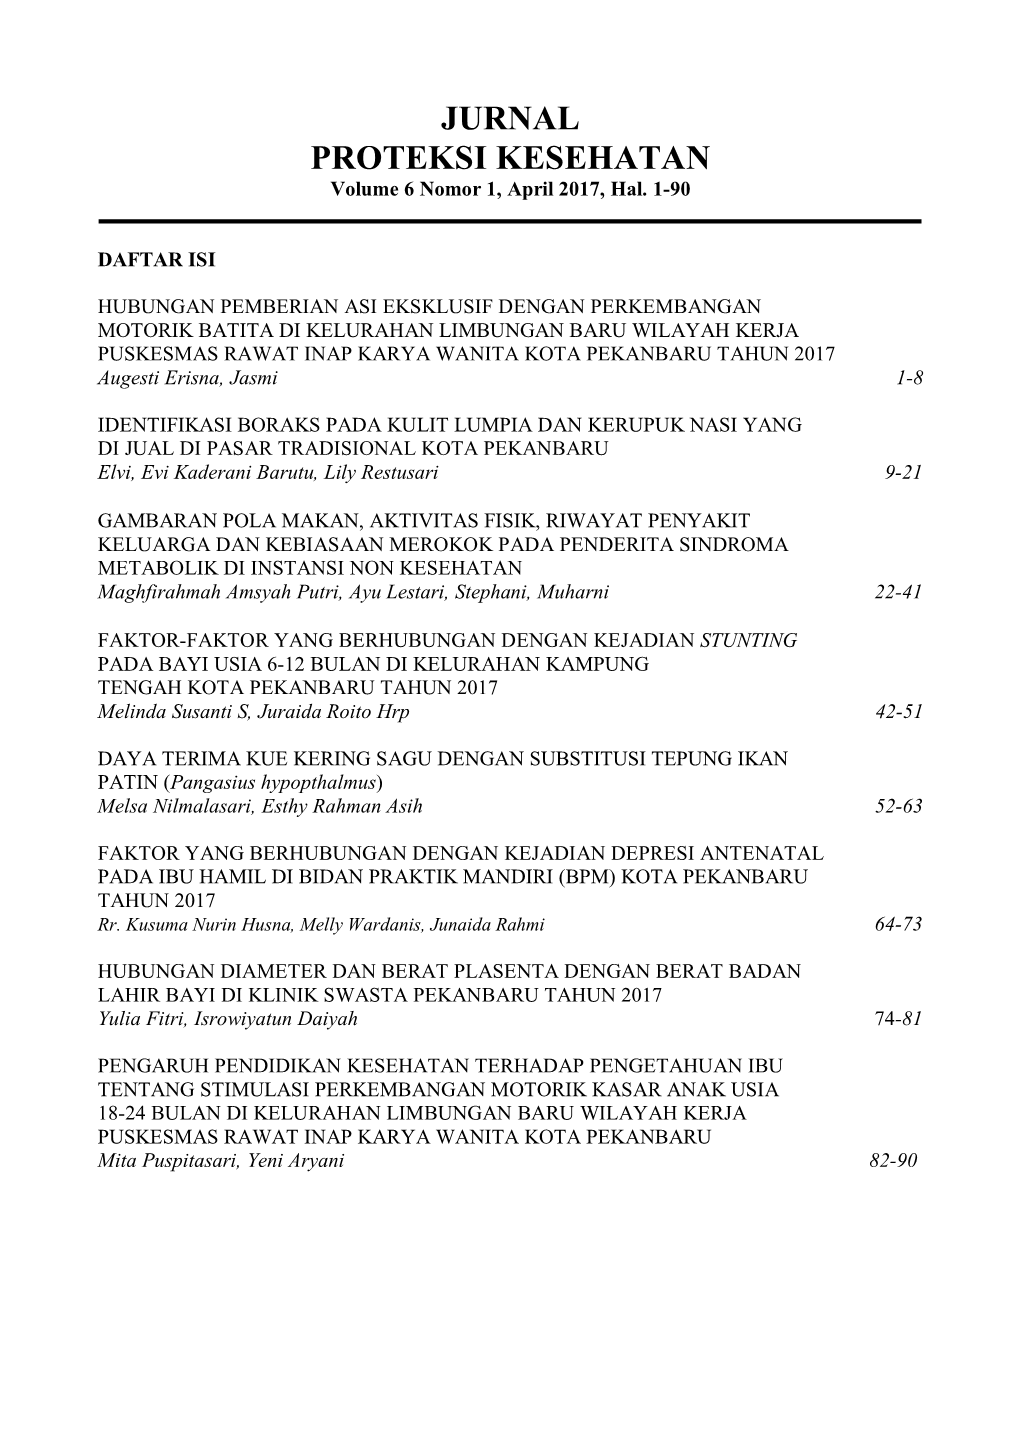 JURNAL PROTEKSI KESEHATAN Volume 6 Nomor 1, April 2017, Hal